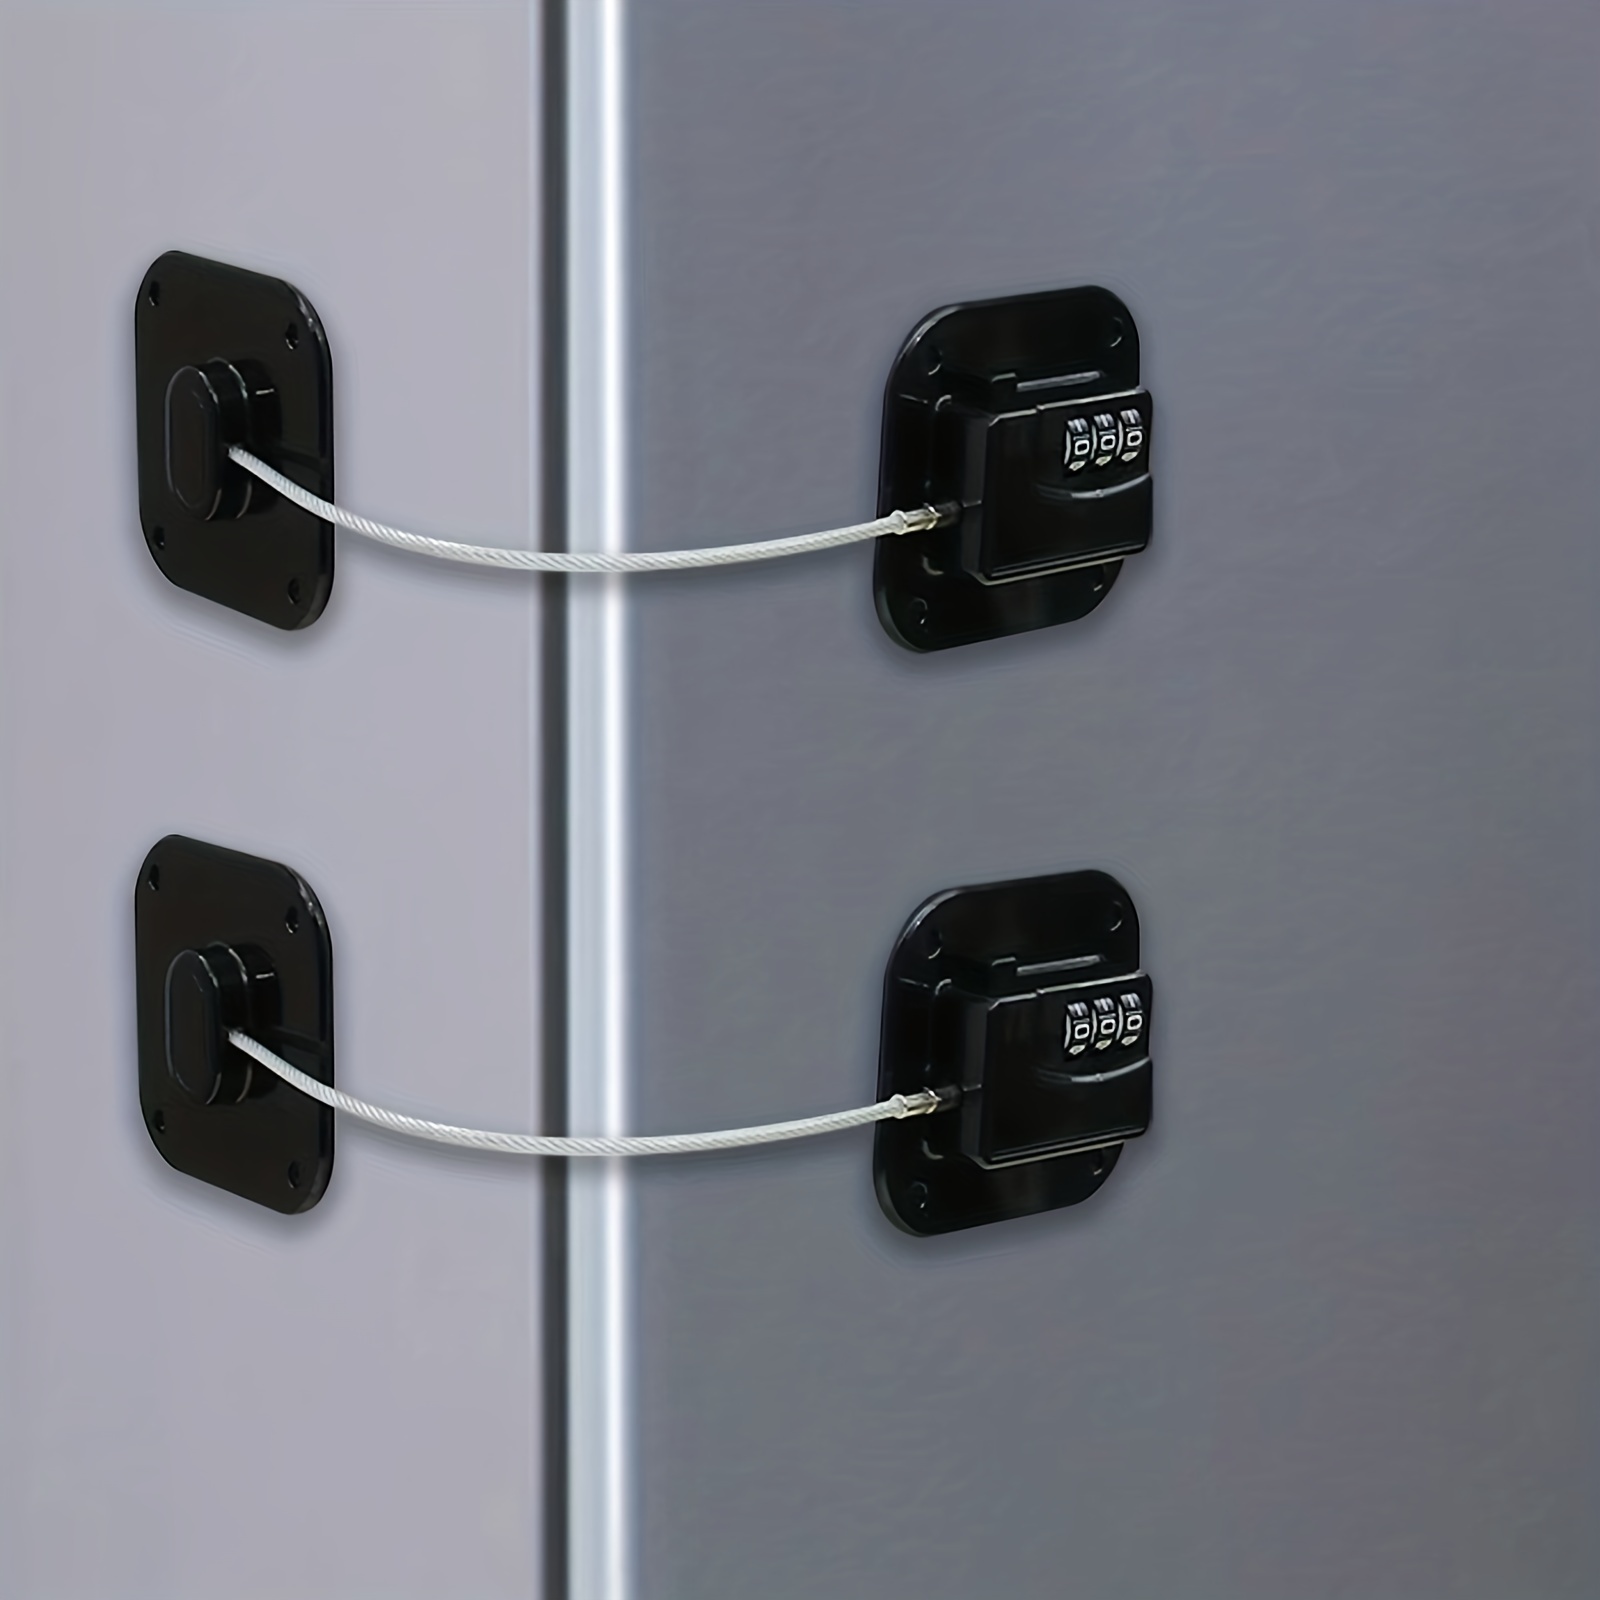 Refrigerator Lock, Fridge Lock with Key for Adults, Lock for a Fridge,  Cabineh